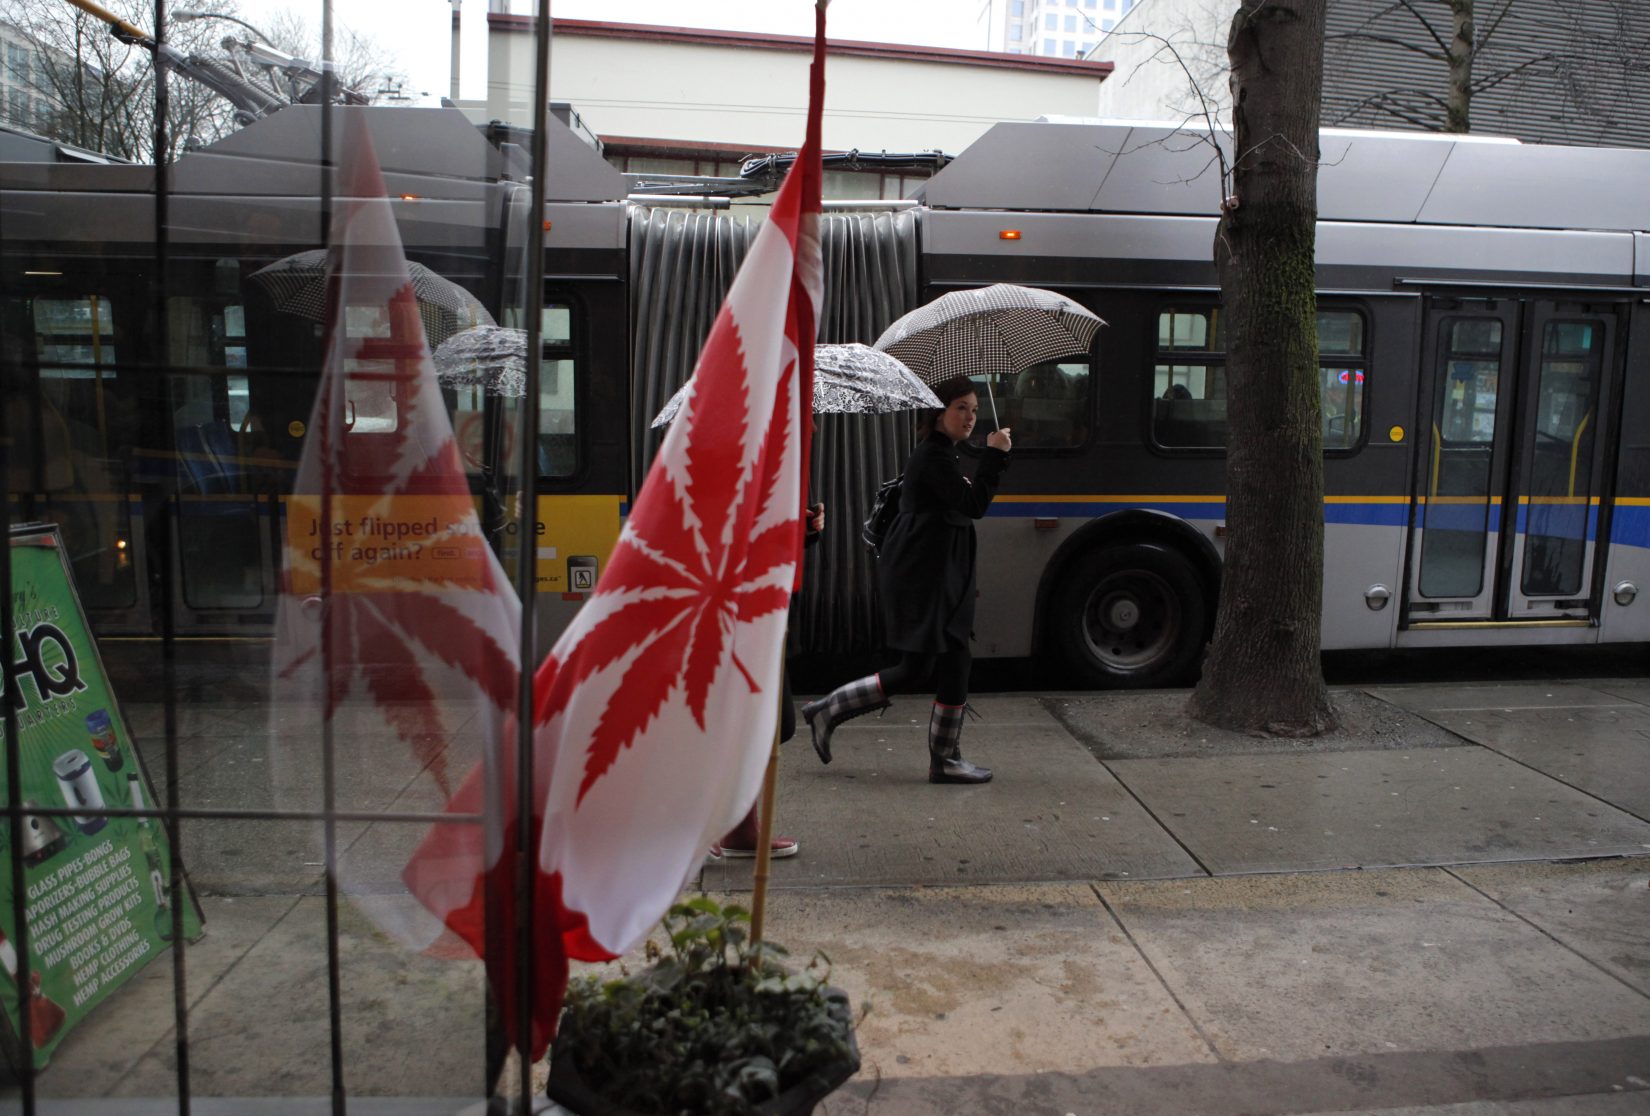 Canada marijuana legalization